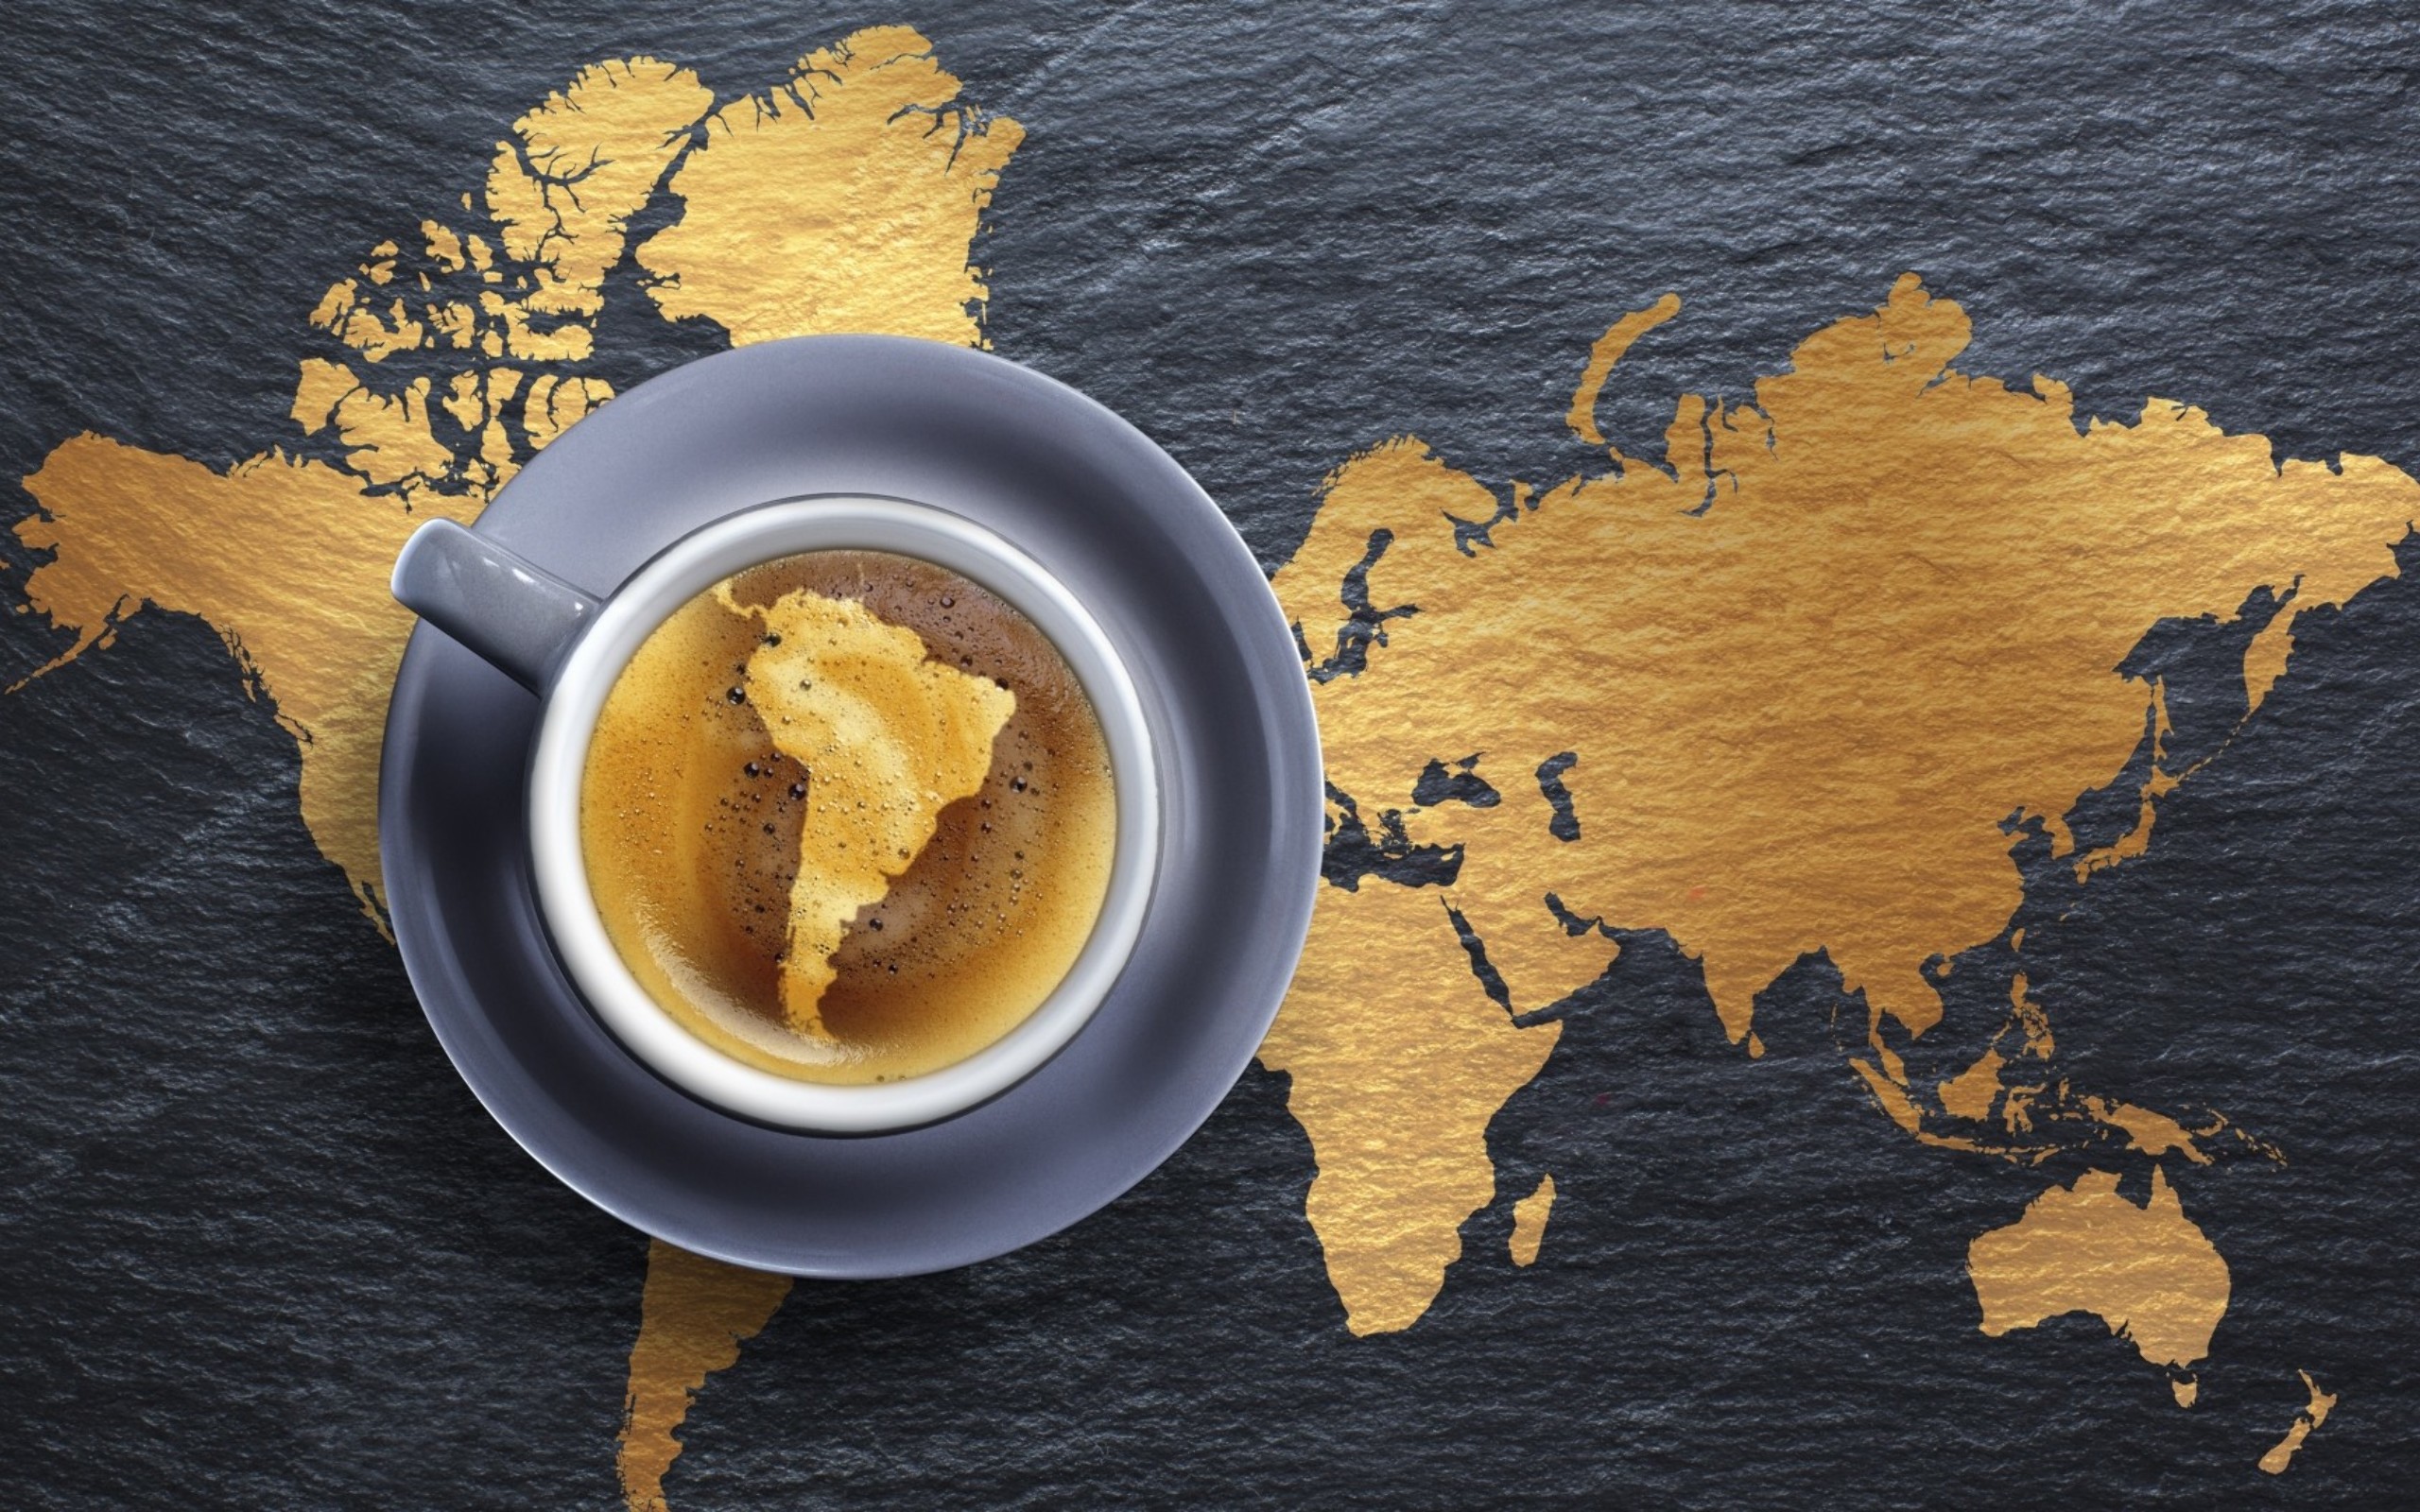 General 2560x1600 world map coffee Earth South America Africa Europe Asia Australia North America digital art